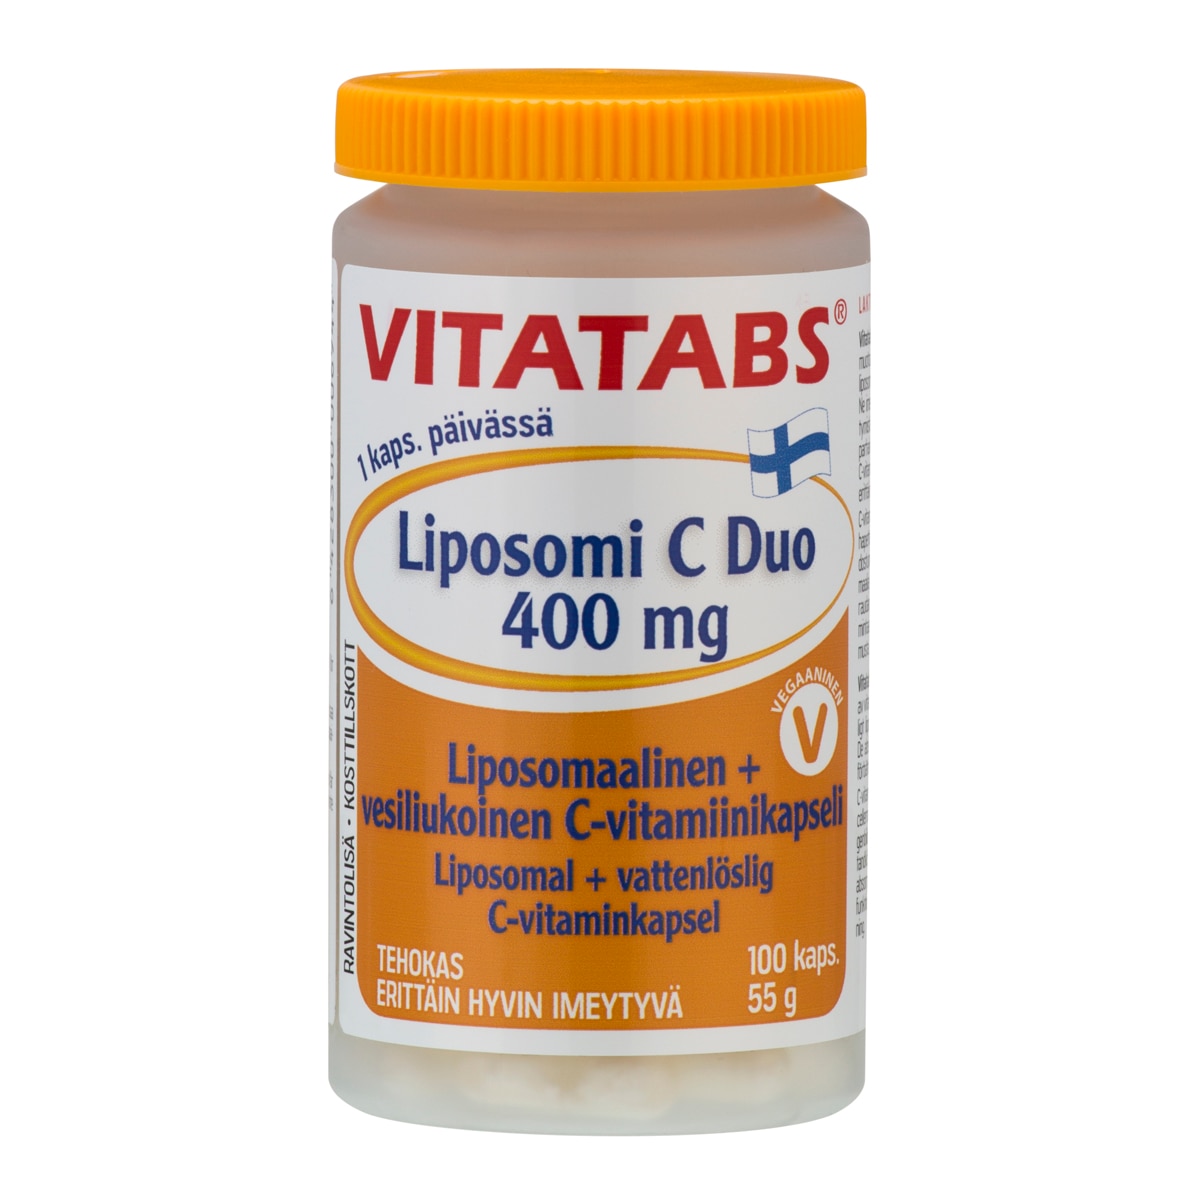 Vitatabs® Liposomi C Duo 400 mg